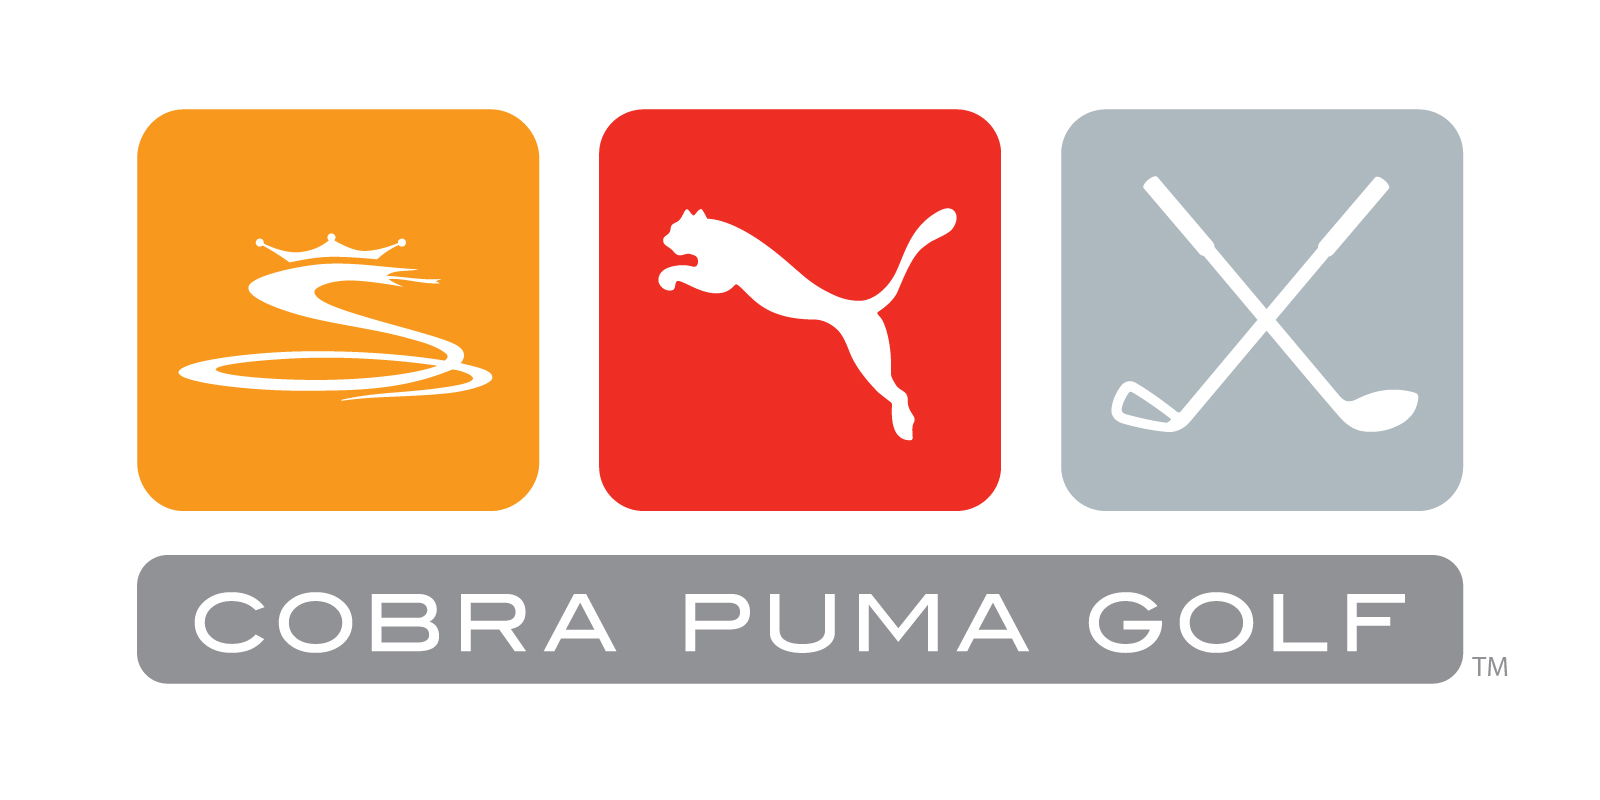 COBRA PUMA GOLF – The Best and Brightest